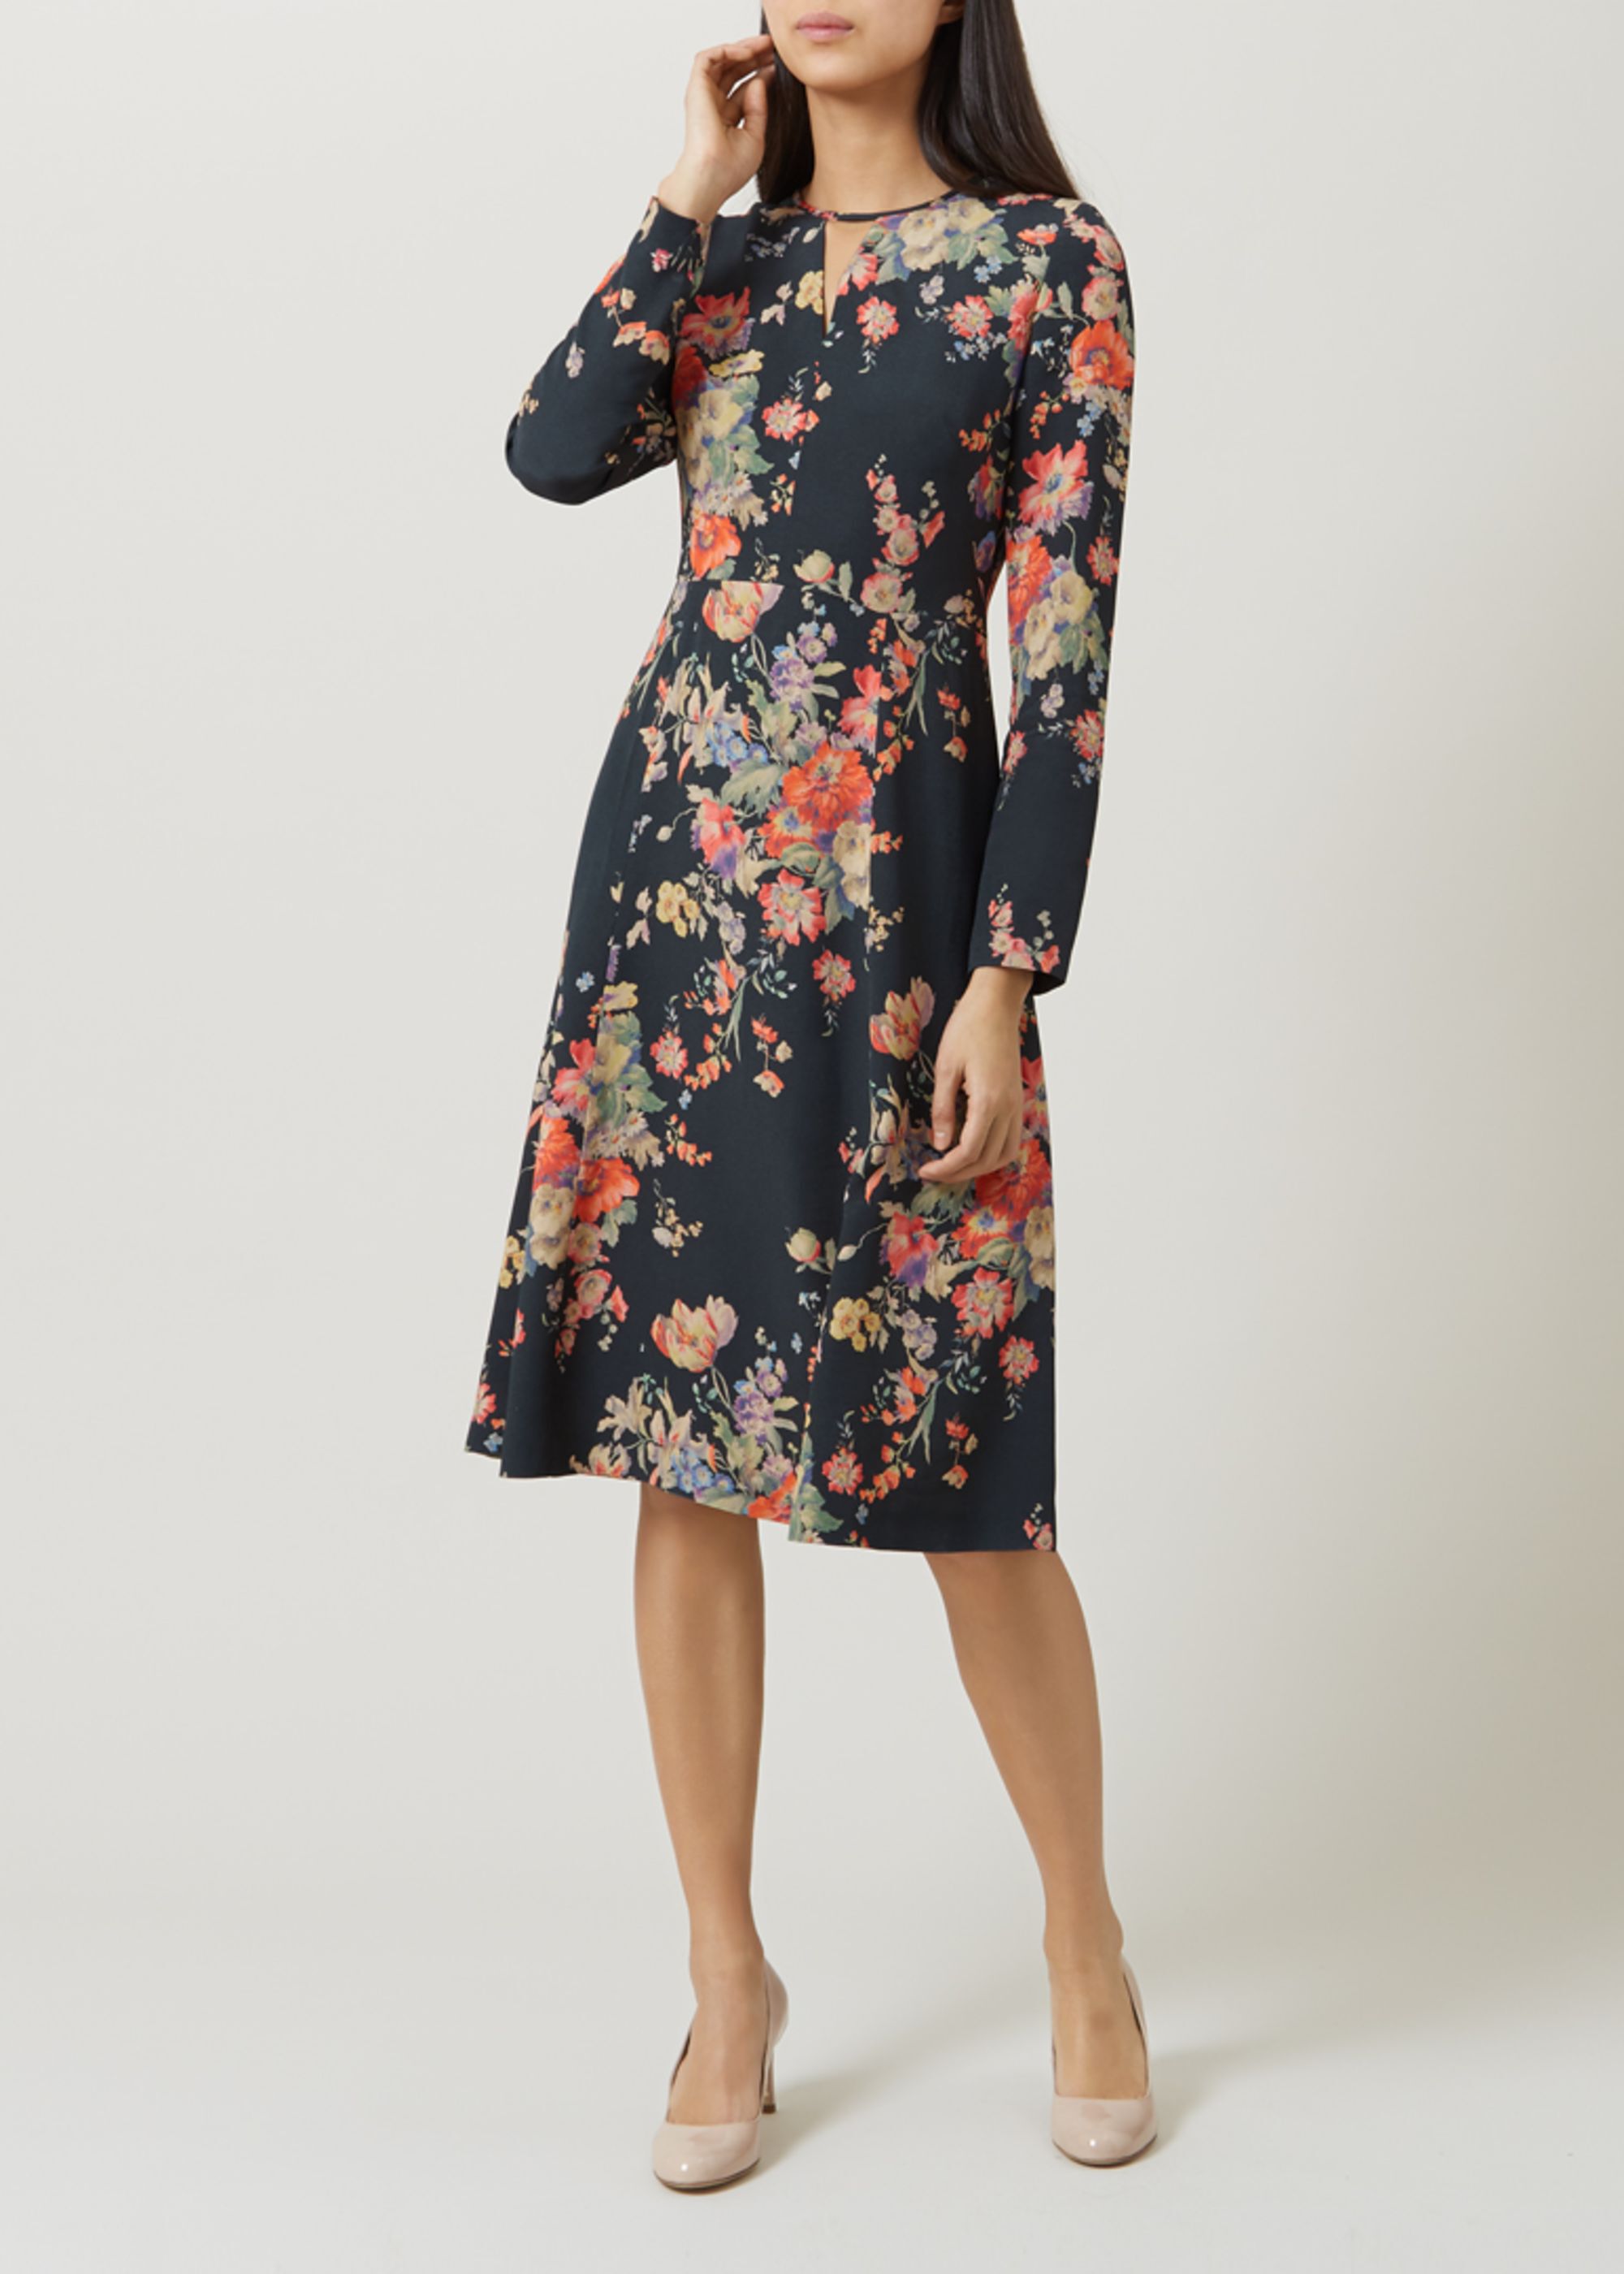 Hobbs Floral Cecilia Dress Knee Length Fit & Flare Long Sleeve | eBay